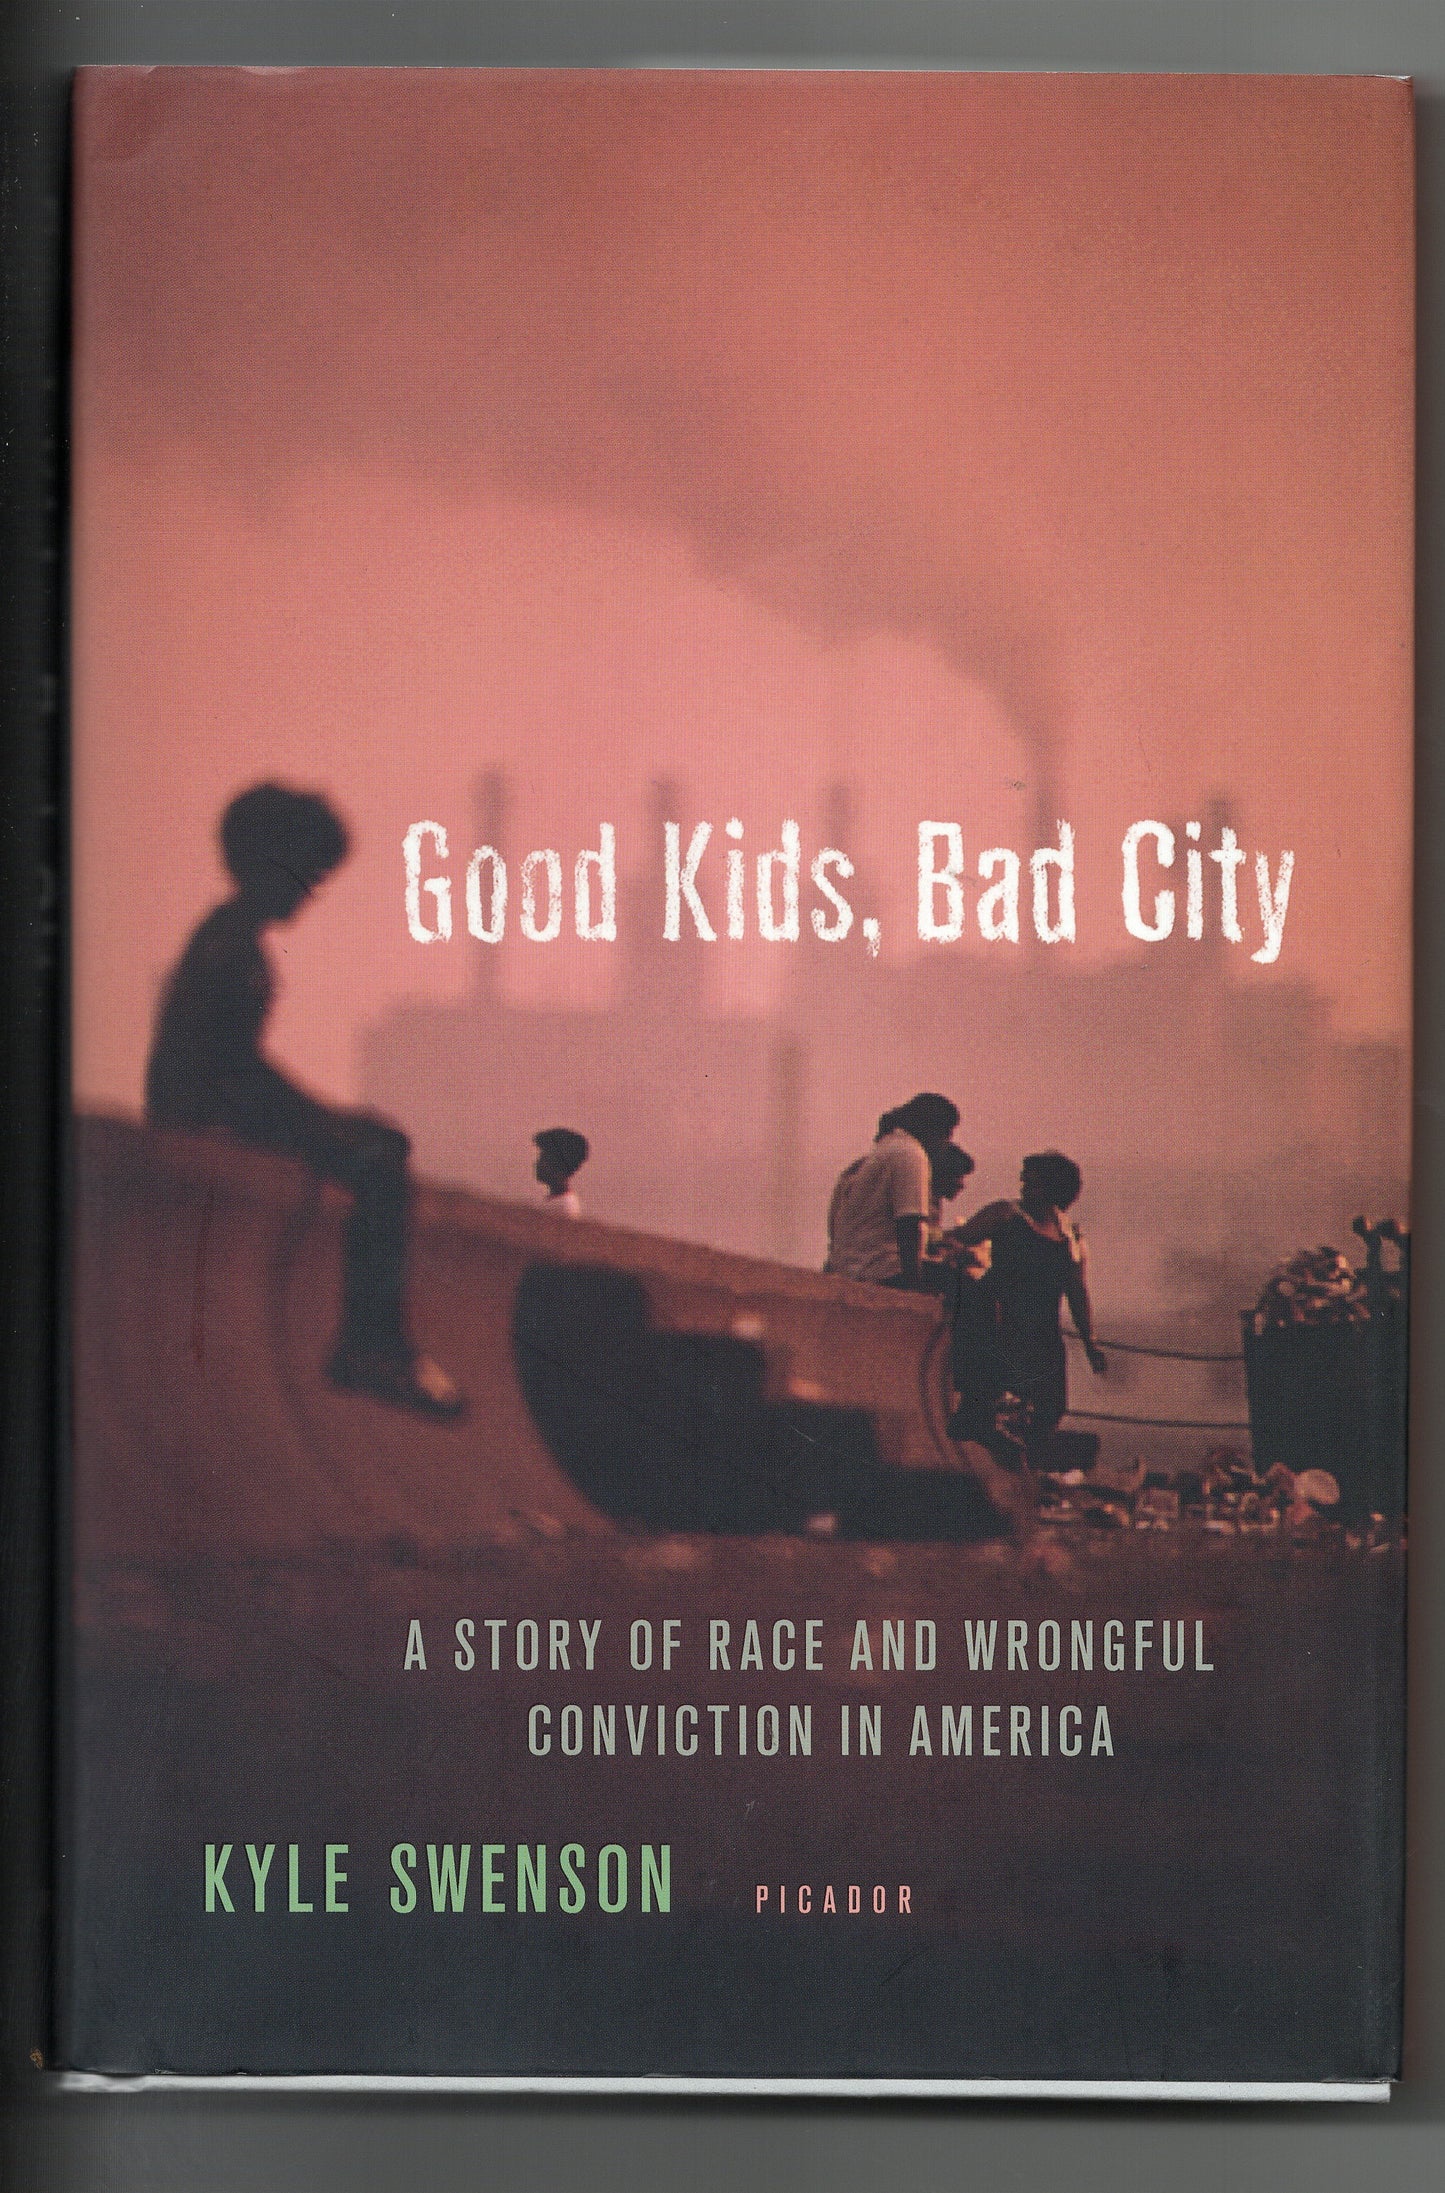 Kyle Swenson - Good Kids, Bad City